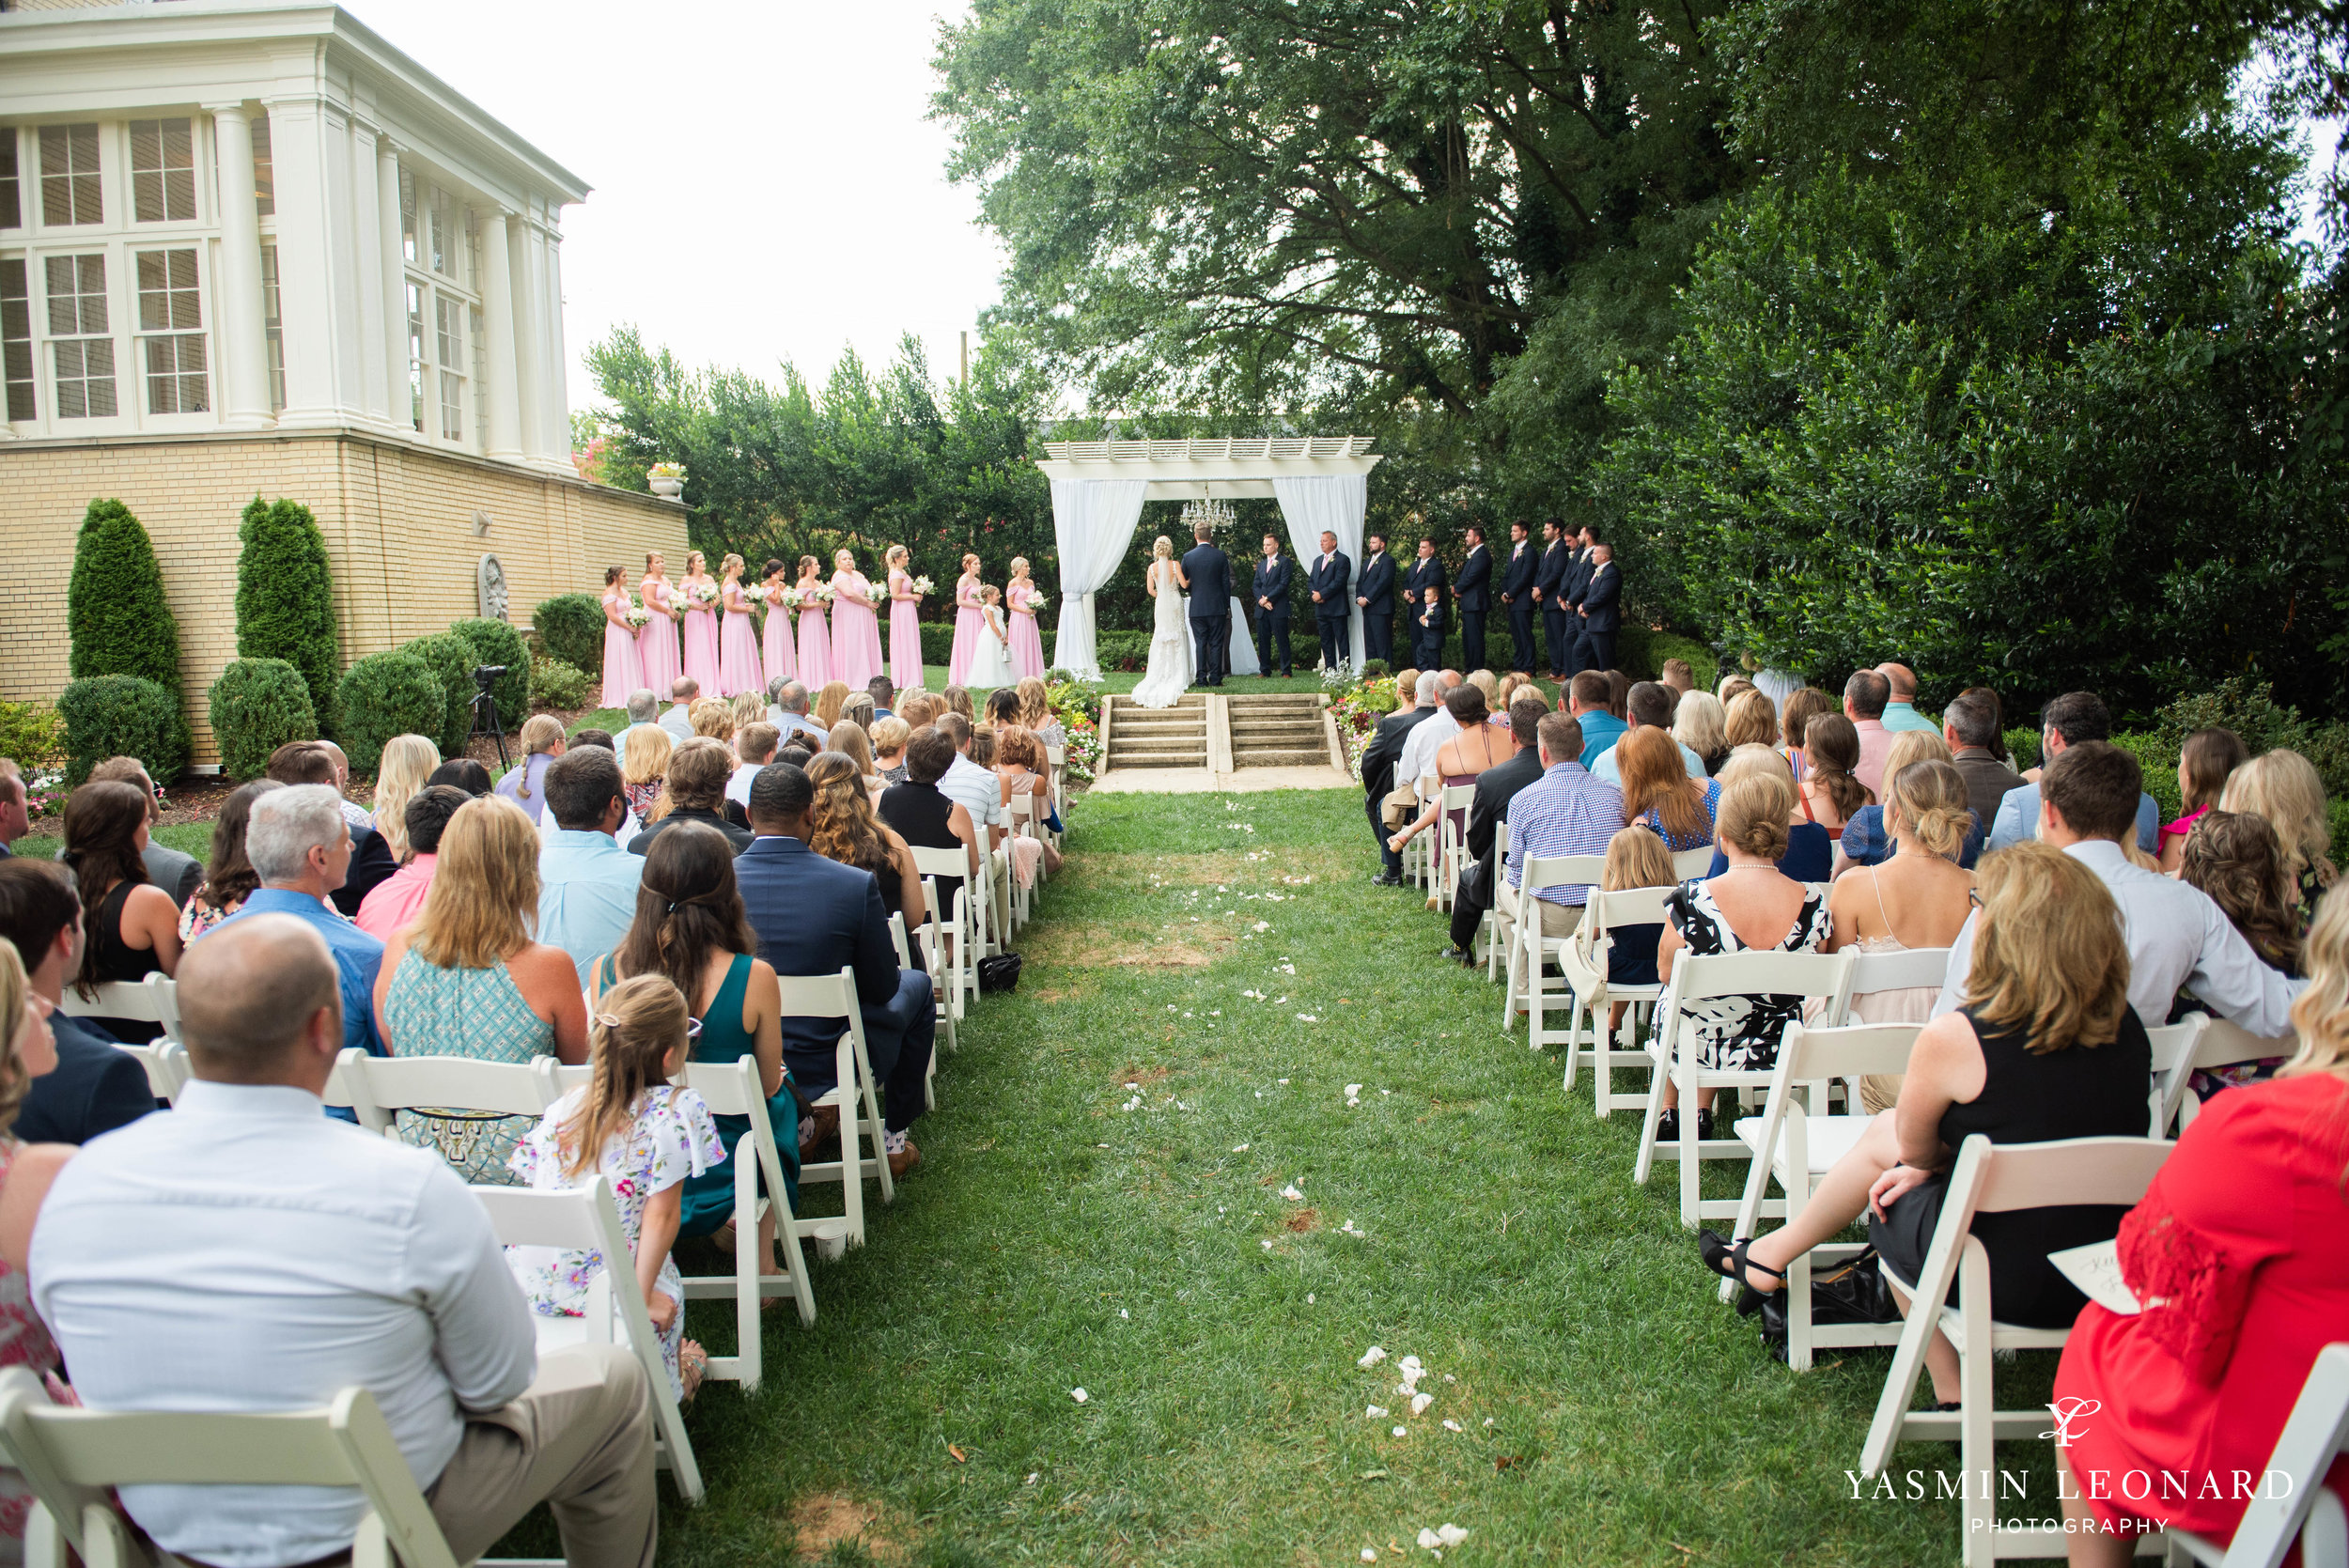 Separk Mansion - NC Weddings - Gastonia Wedding - NC Wedding Venues - Pink and Blue Wedding Ideas - Pink Bridesmaid Dresses - Yasmin Leonard Photography-21.jpg